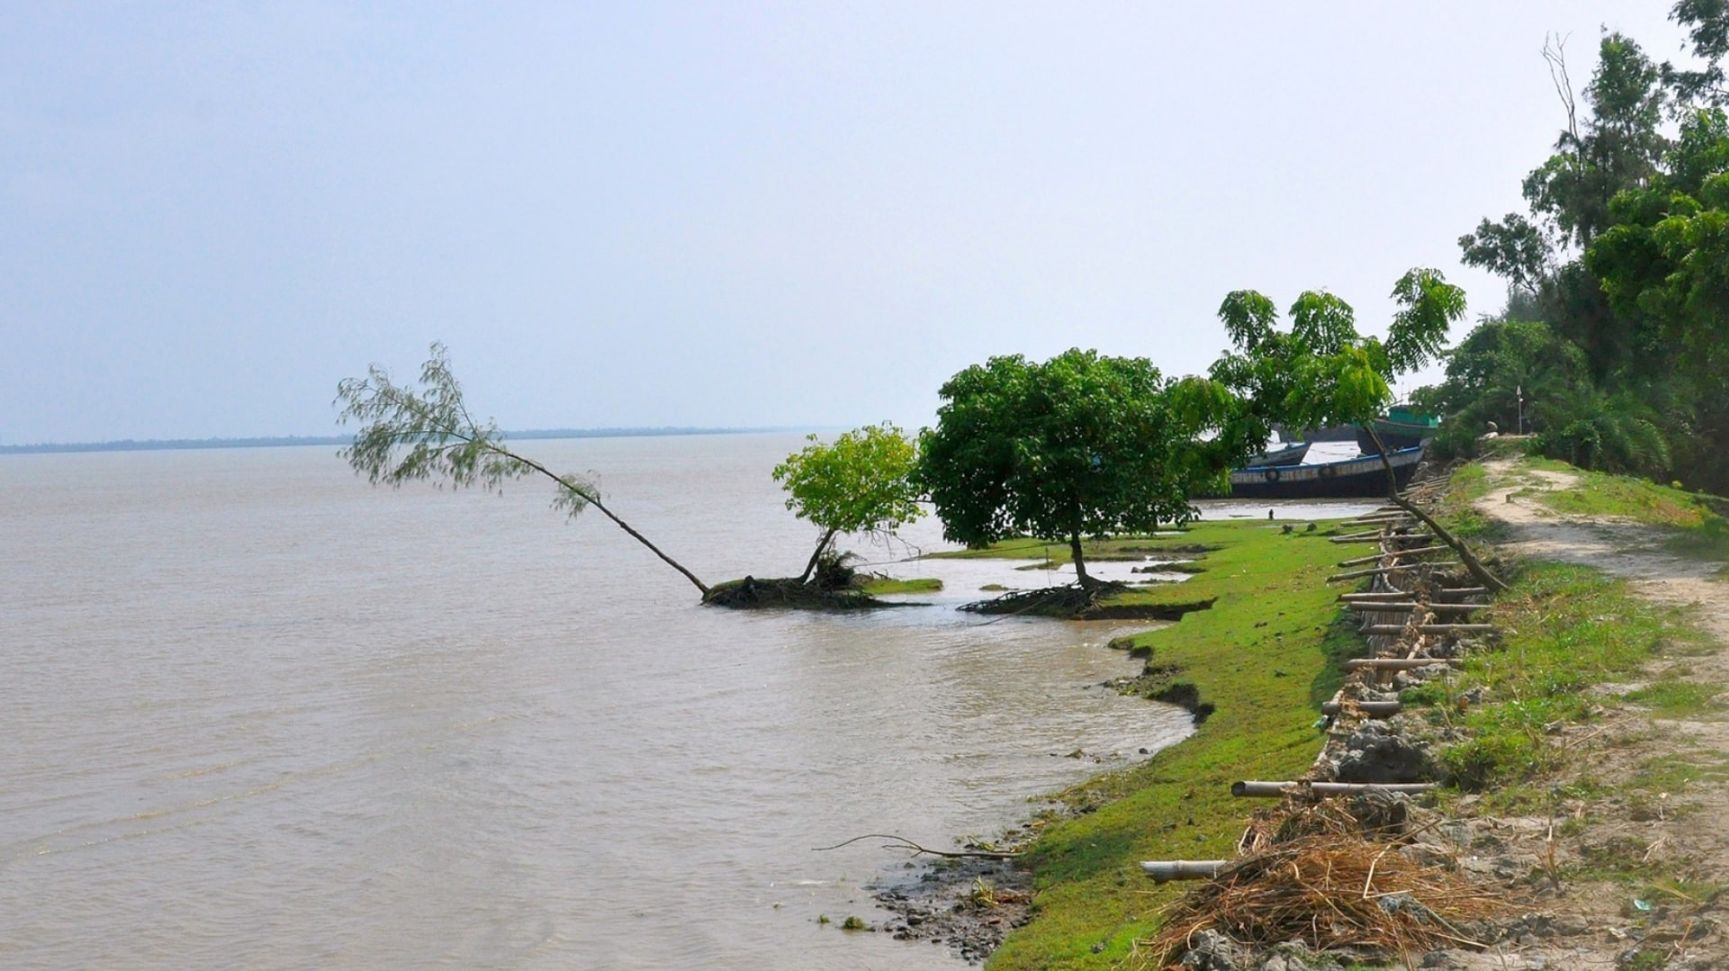 The landscape of Ghoramara island in the Sundarbans (Image: Anup Bhattacharya)